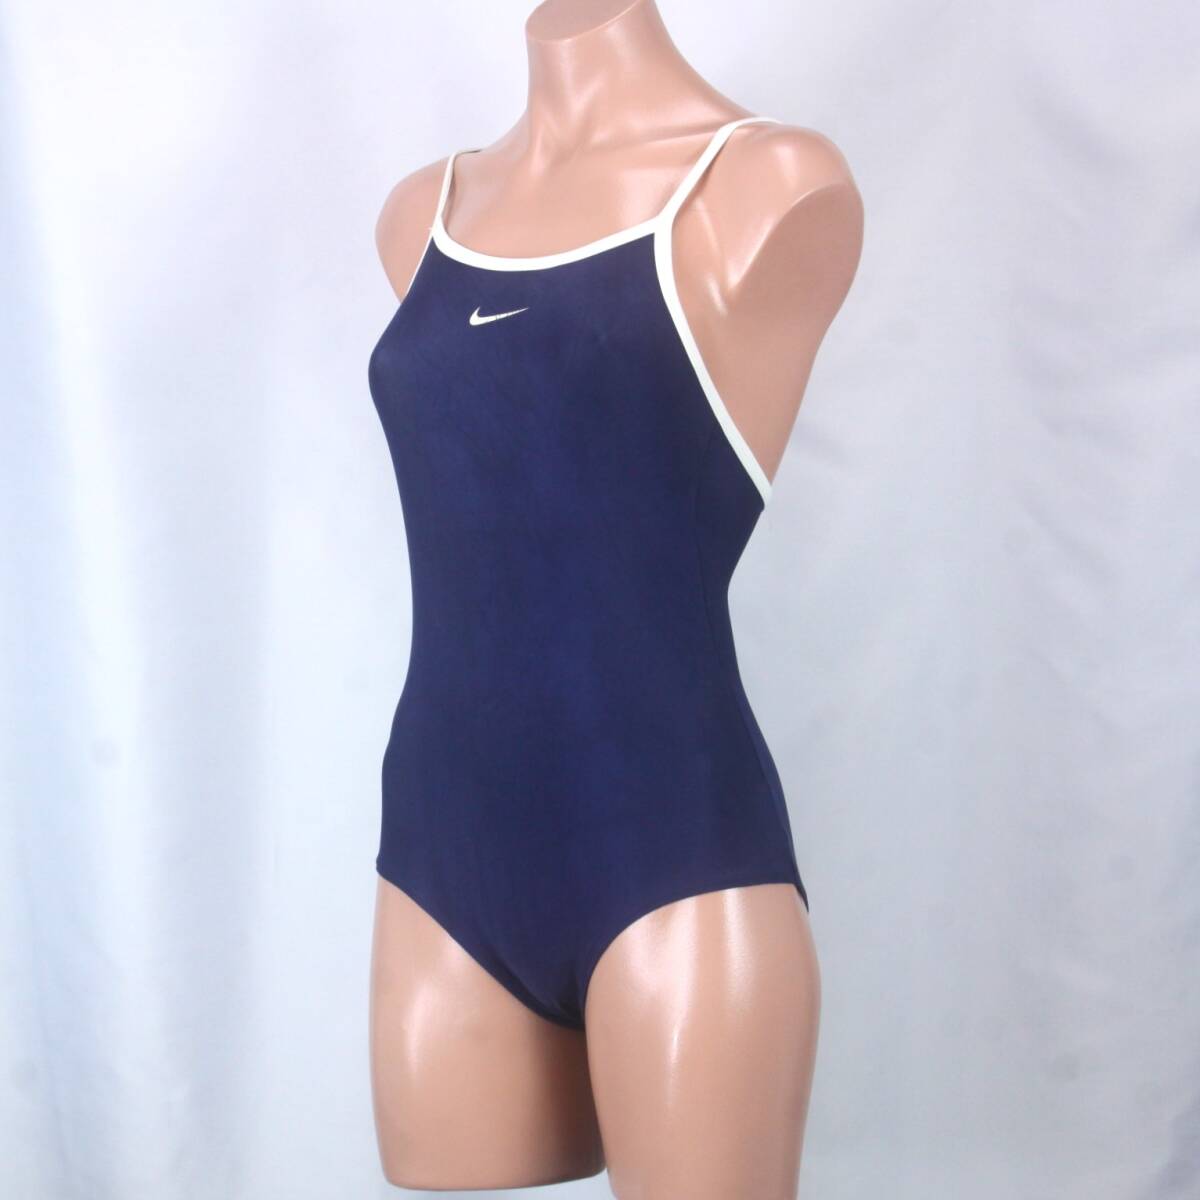 U8504☆競泳水着 女子 レディース ジュニア ネイビー 紺黒系 ワンピース NIKE 150 Mサイズ 水泳 女子 スイムウェア スイミング プールの画像1